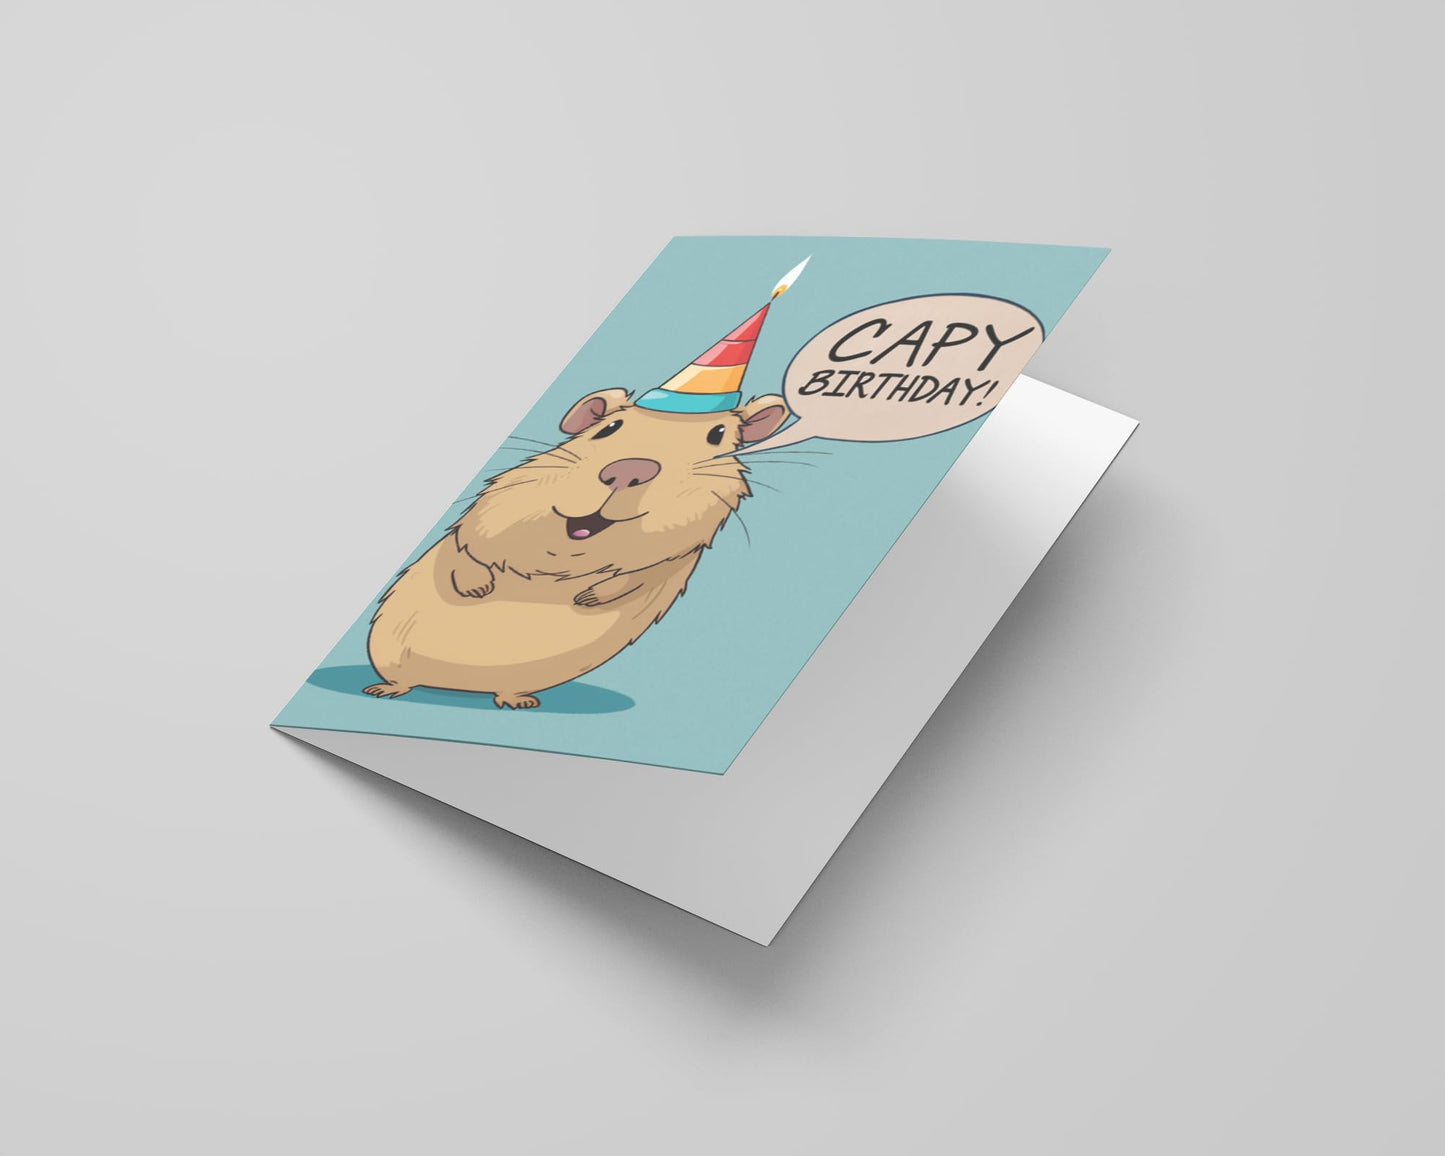 Capybara Birthday Card (Pop-Art) for Kids with Envelope